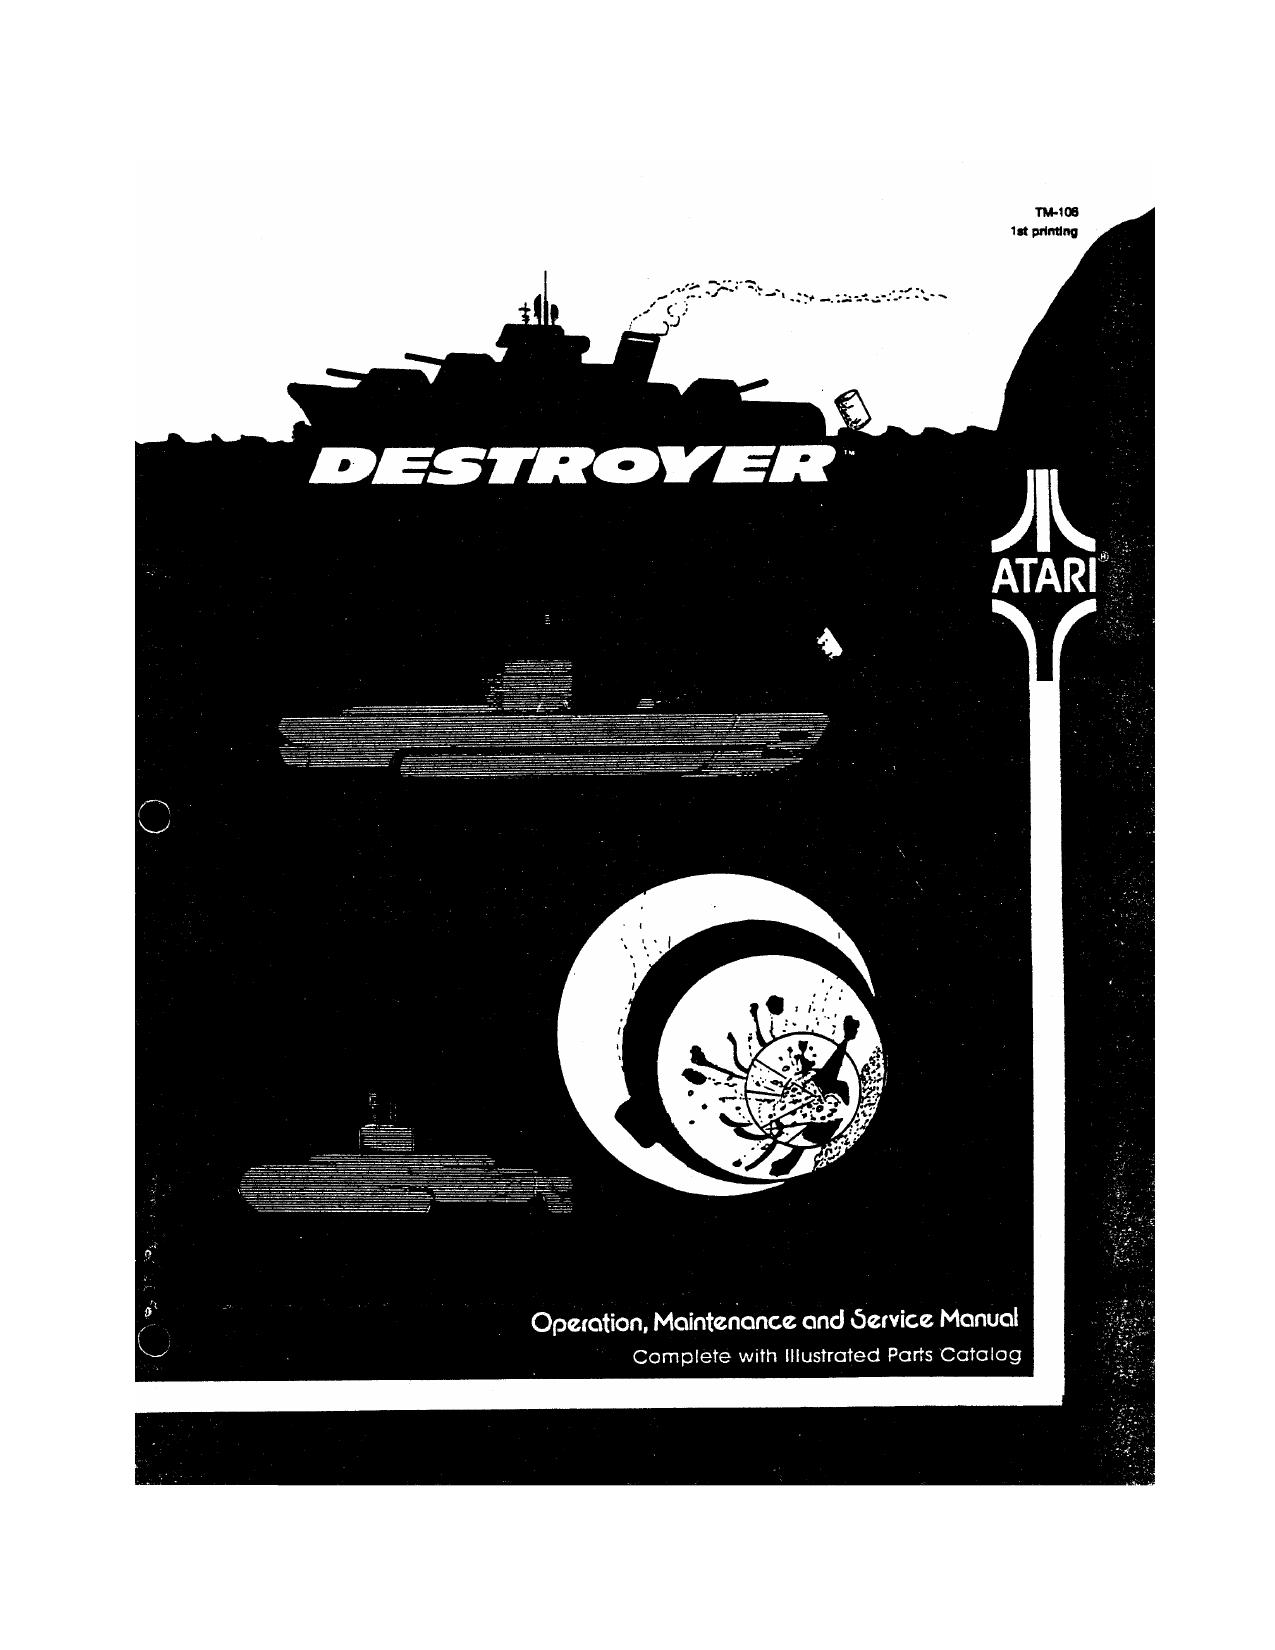 Destroyer TM-108 1st Printing